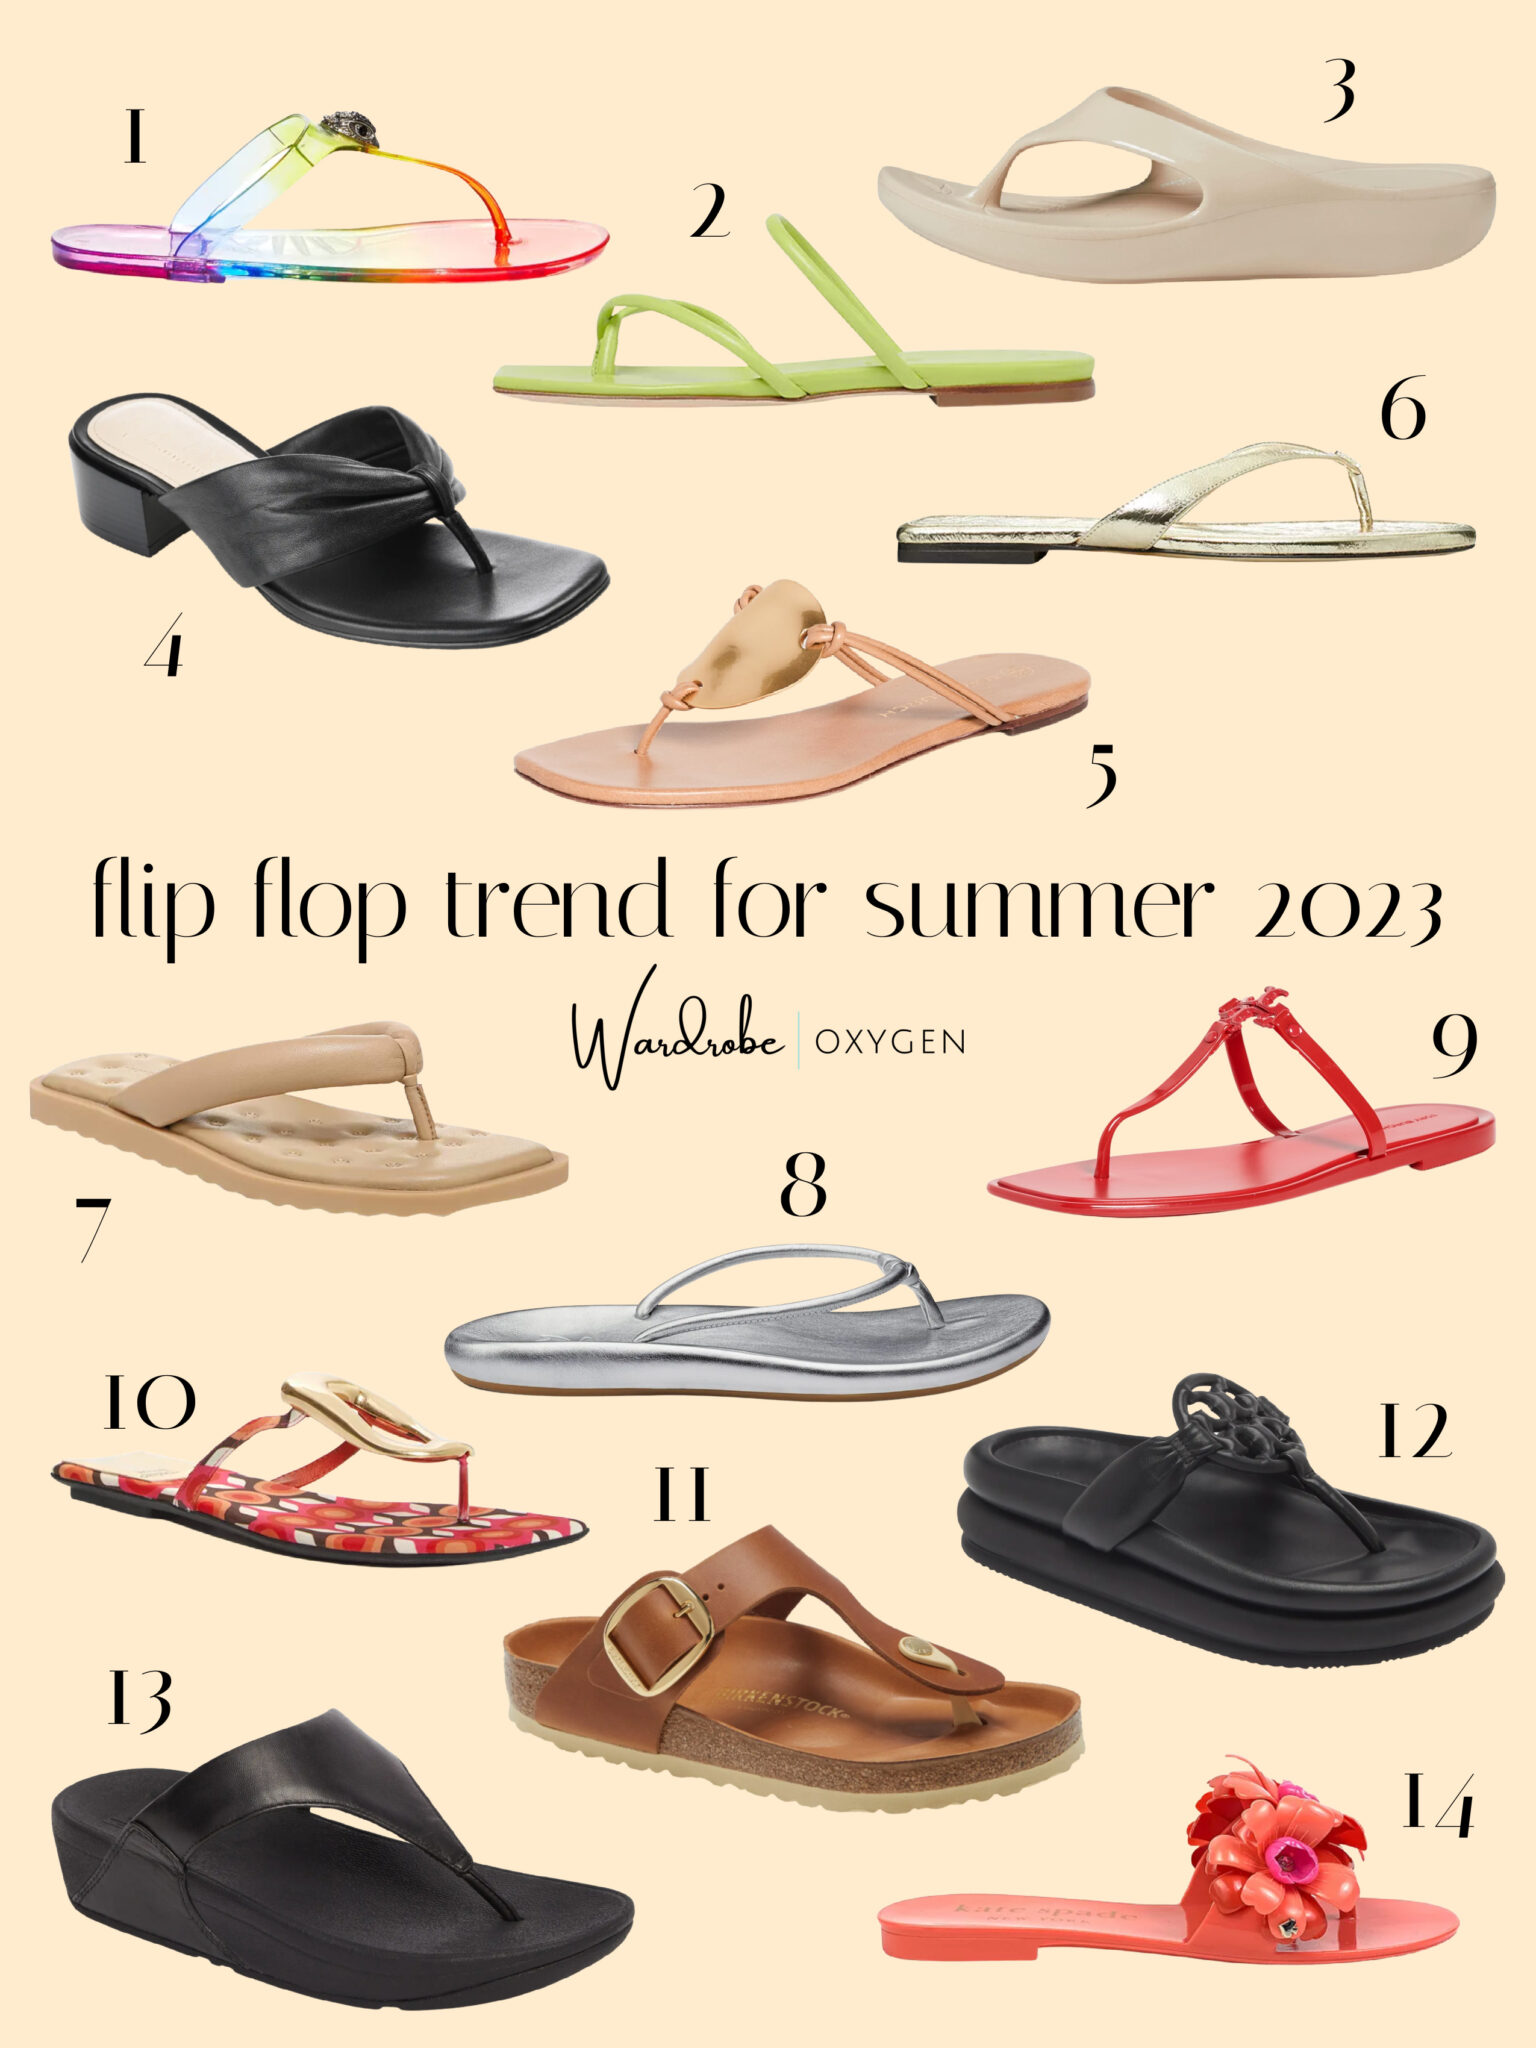 6 Top Summer Shoe Trends for Grown Women: 2023 Edition